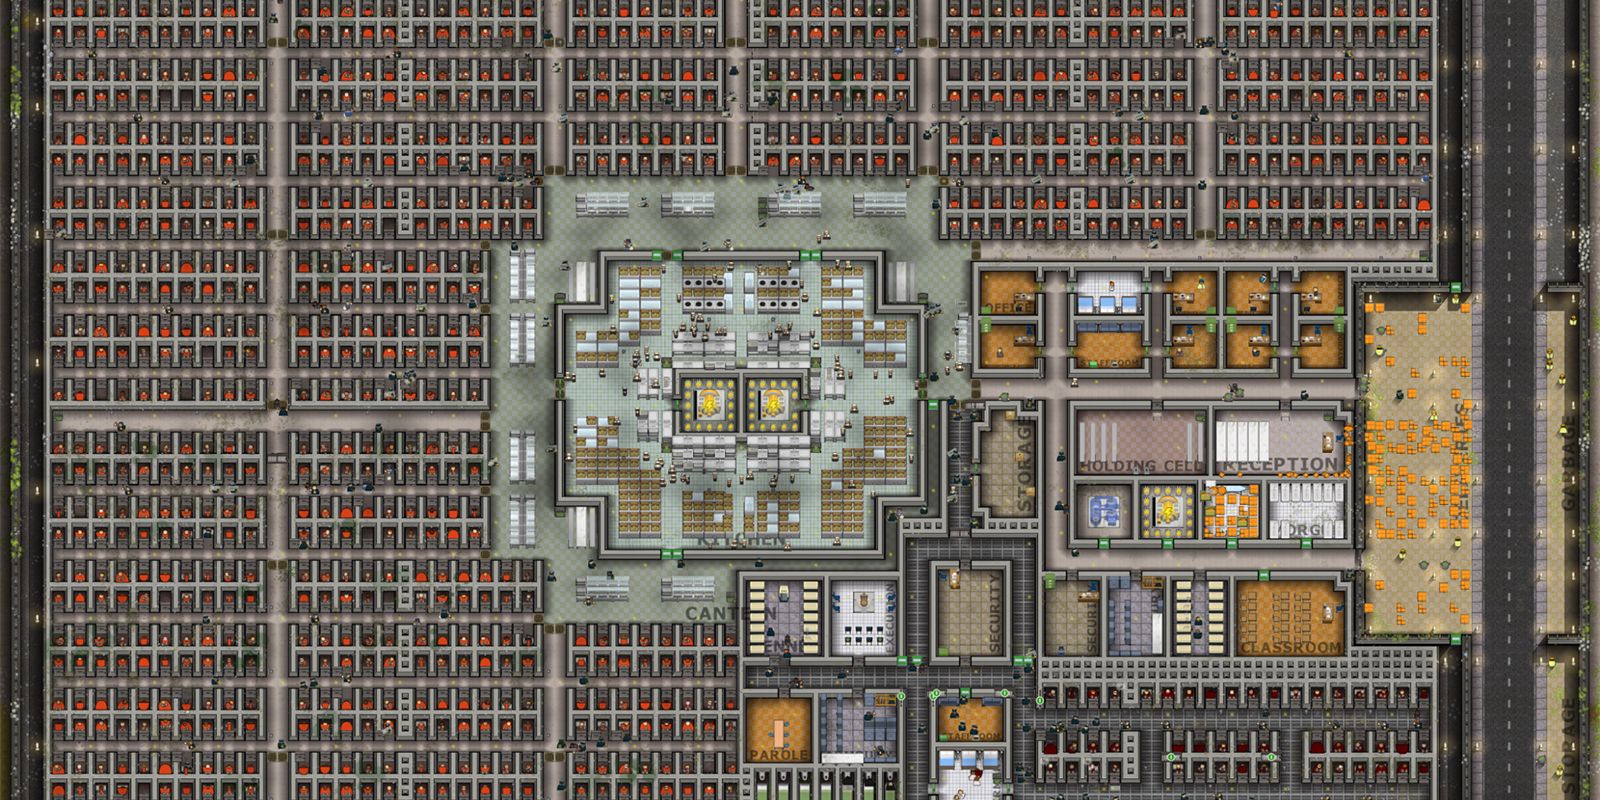 prison architect layout tips